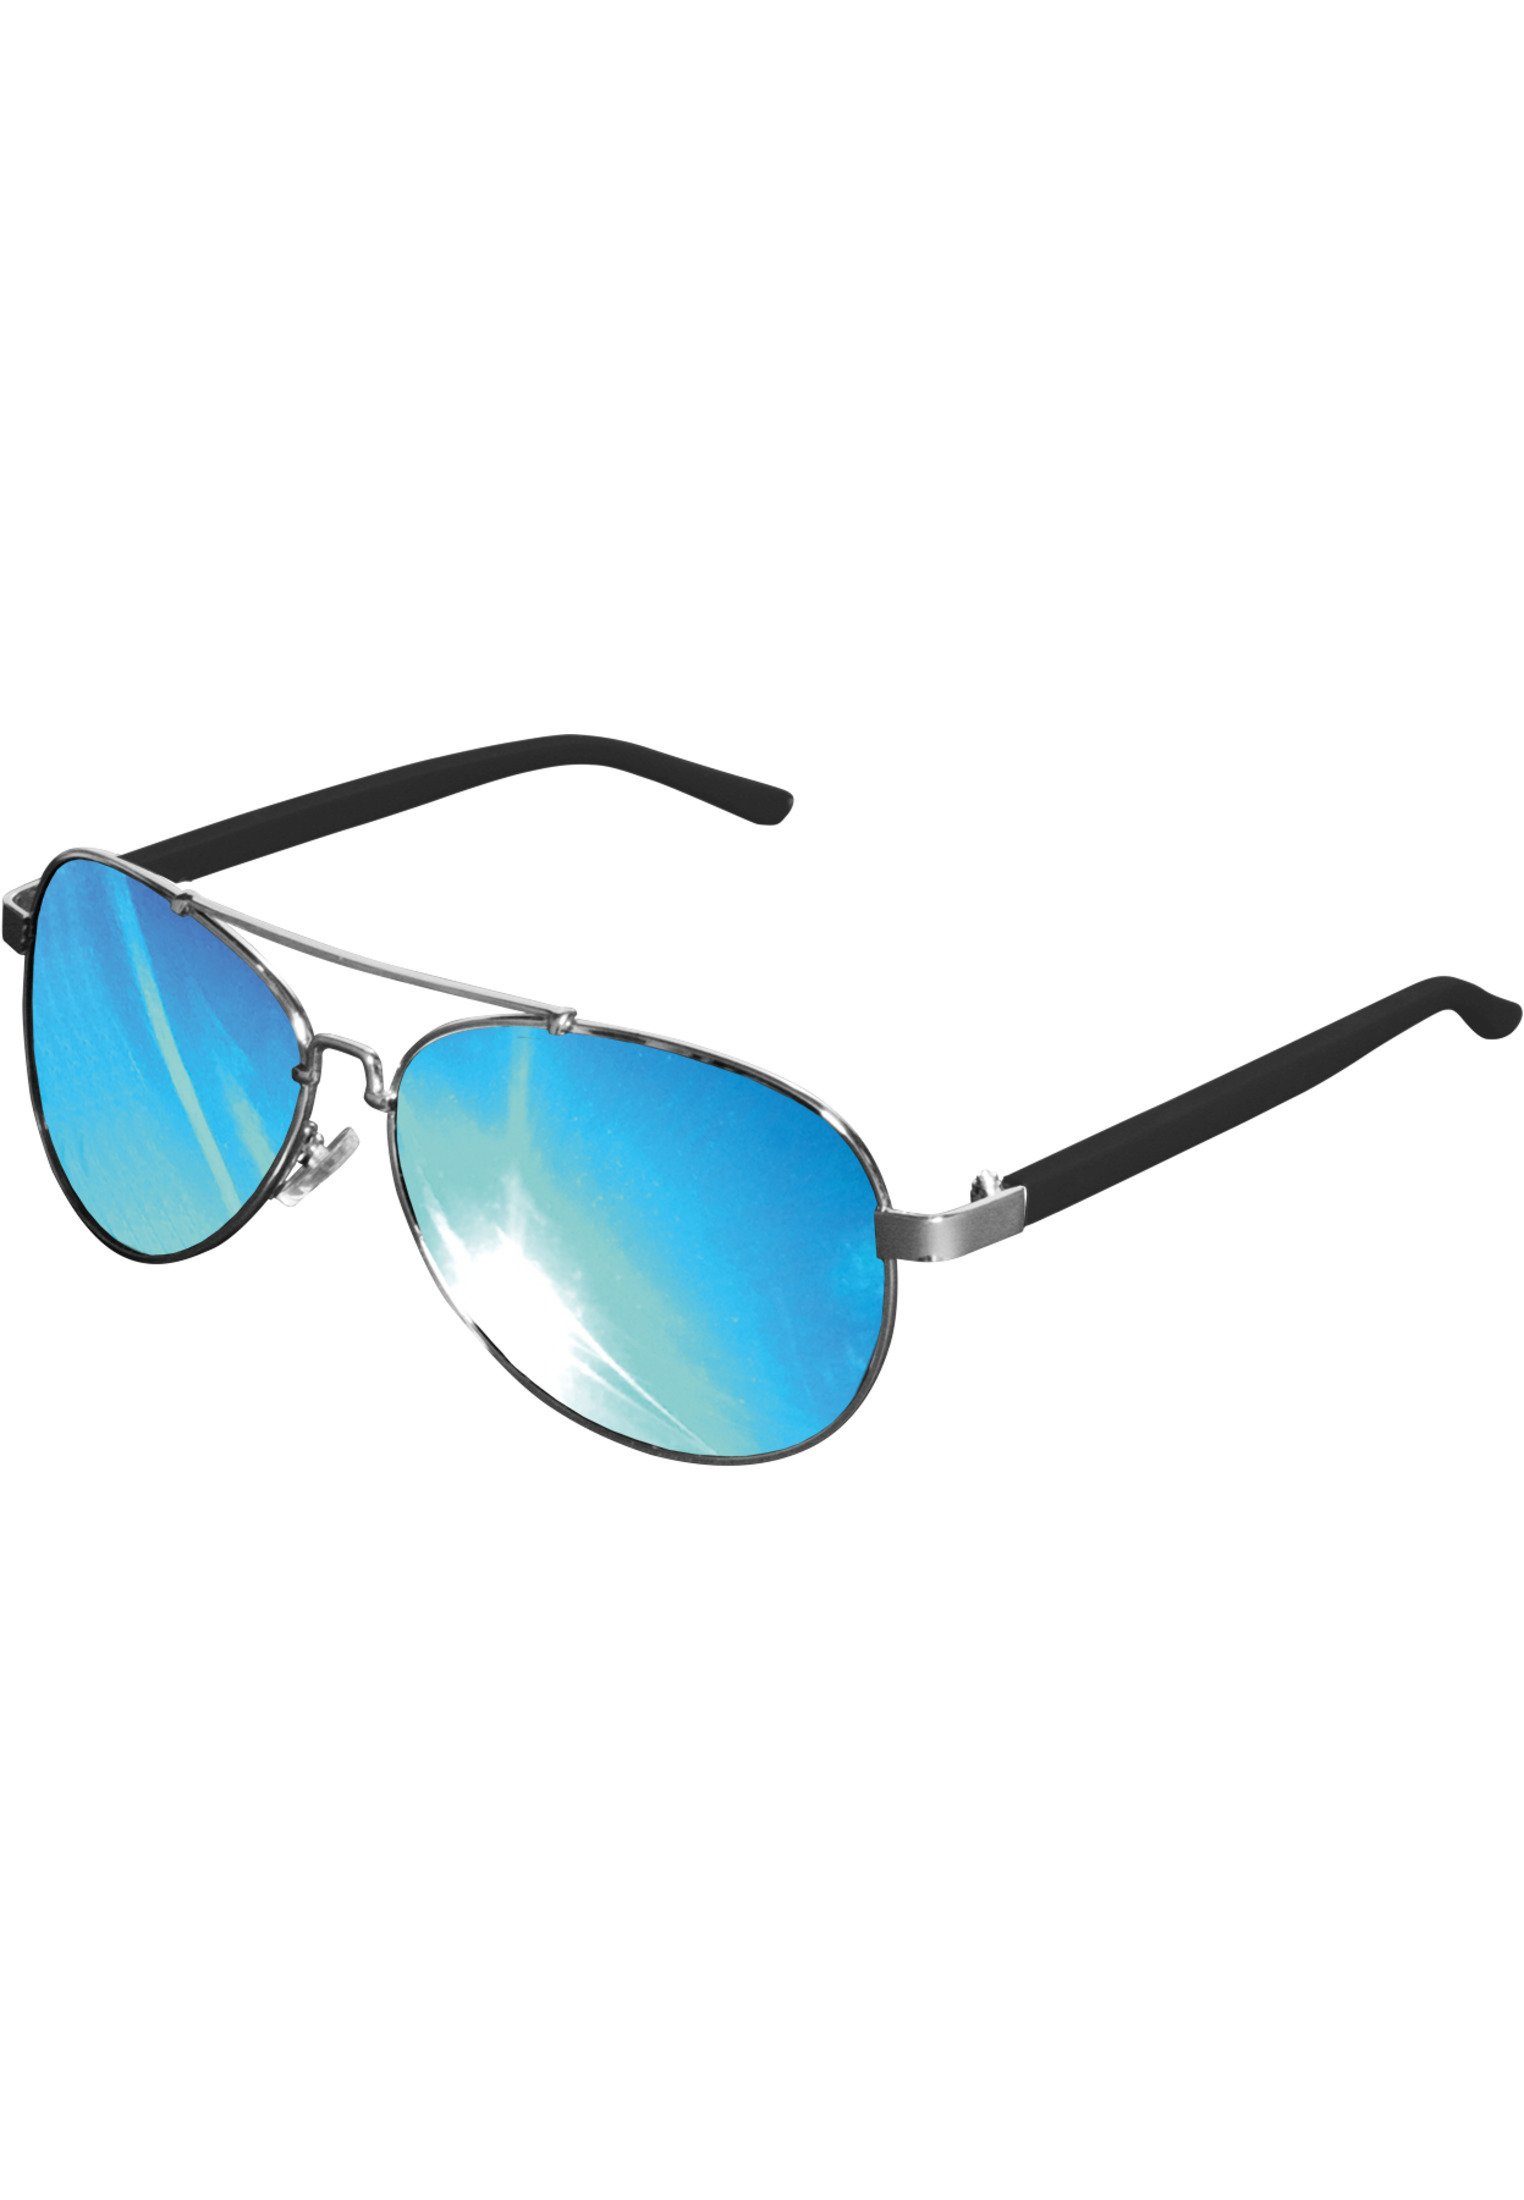 MSTRDS Sonnenbrille Accessoires Sunglasses Mumbo Mirror silver/blue